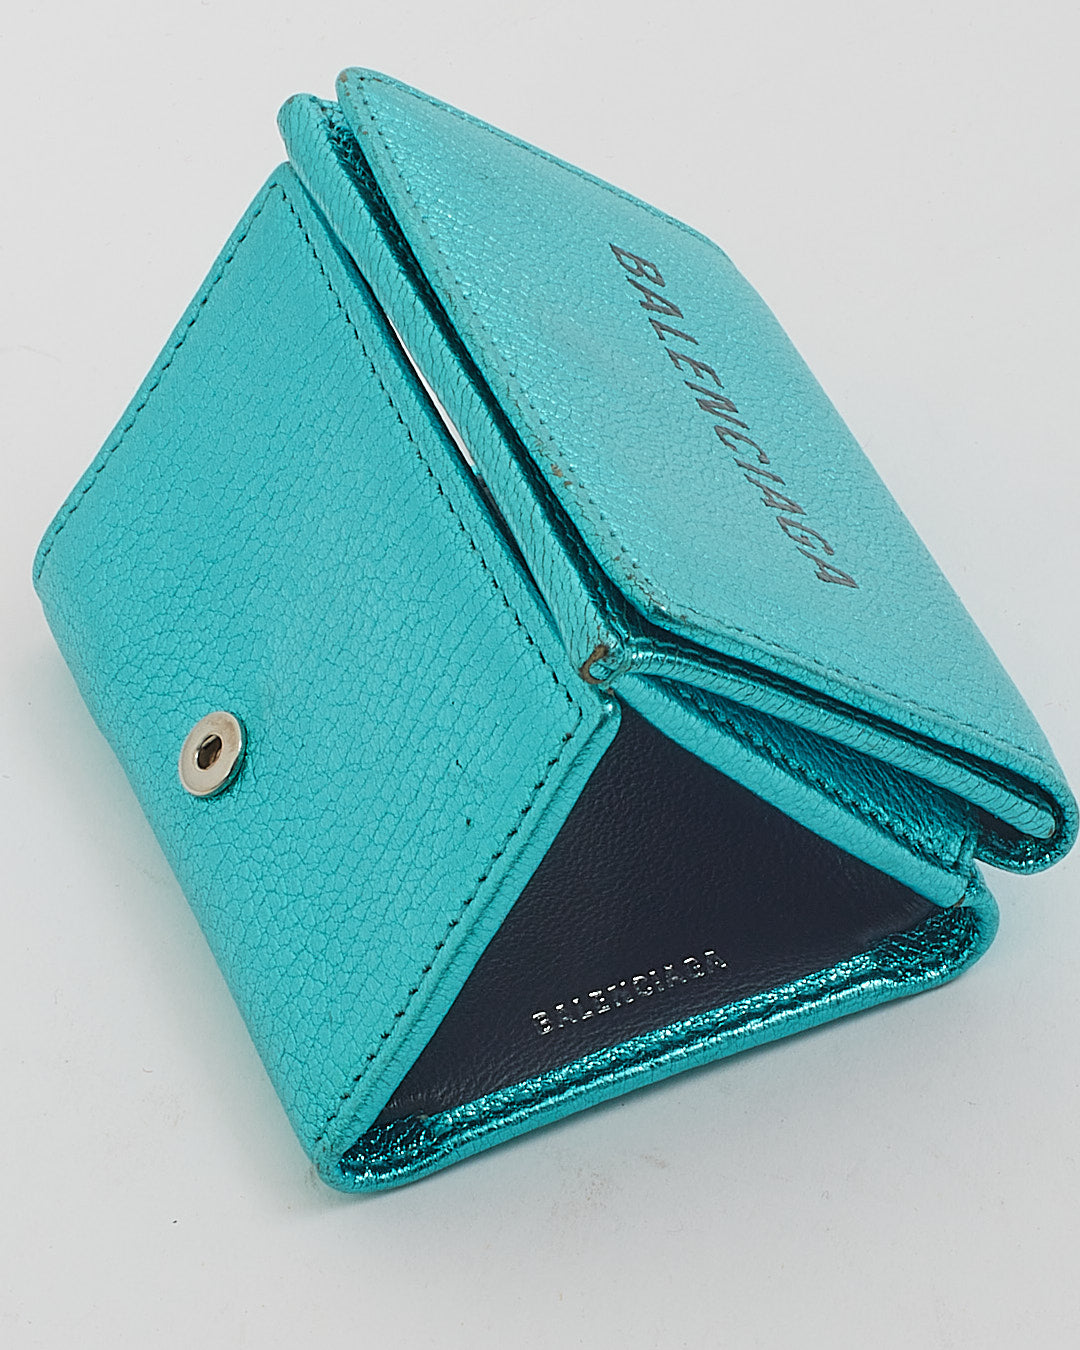 Balenciaga Blue Metallic Leather Logo Small Trifold Wallet